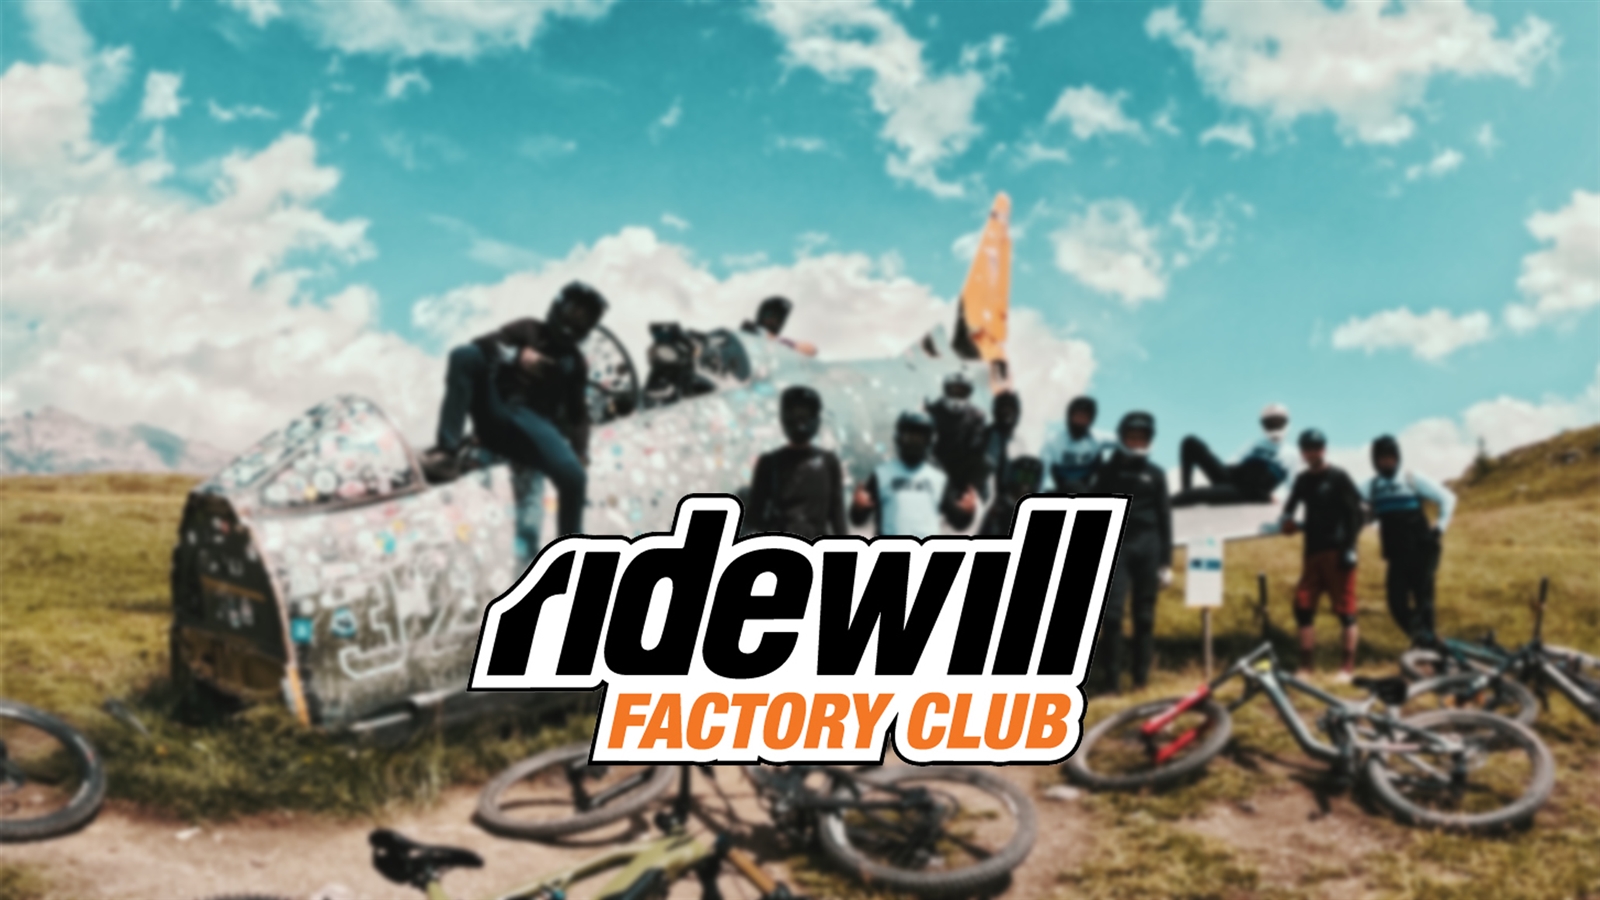 Ridewill Factory Club - Ridewill Magazine